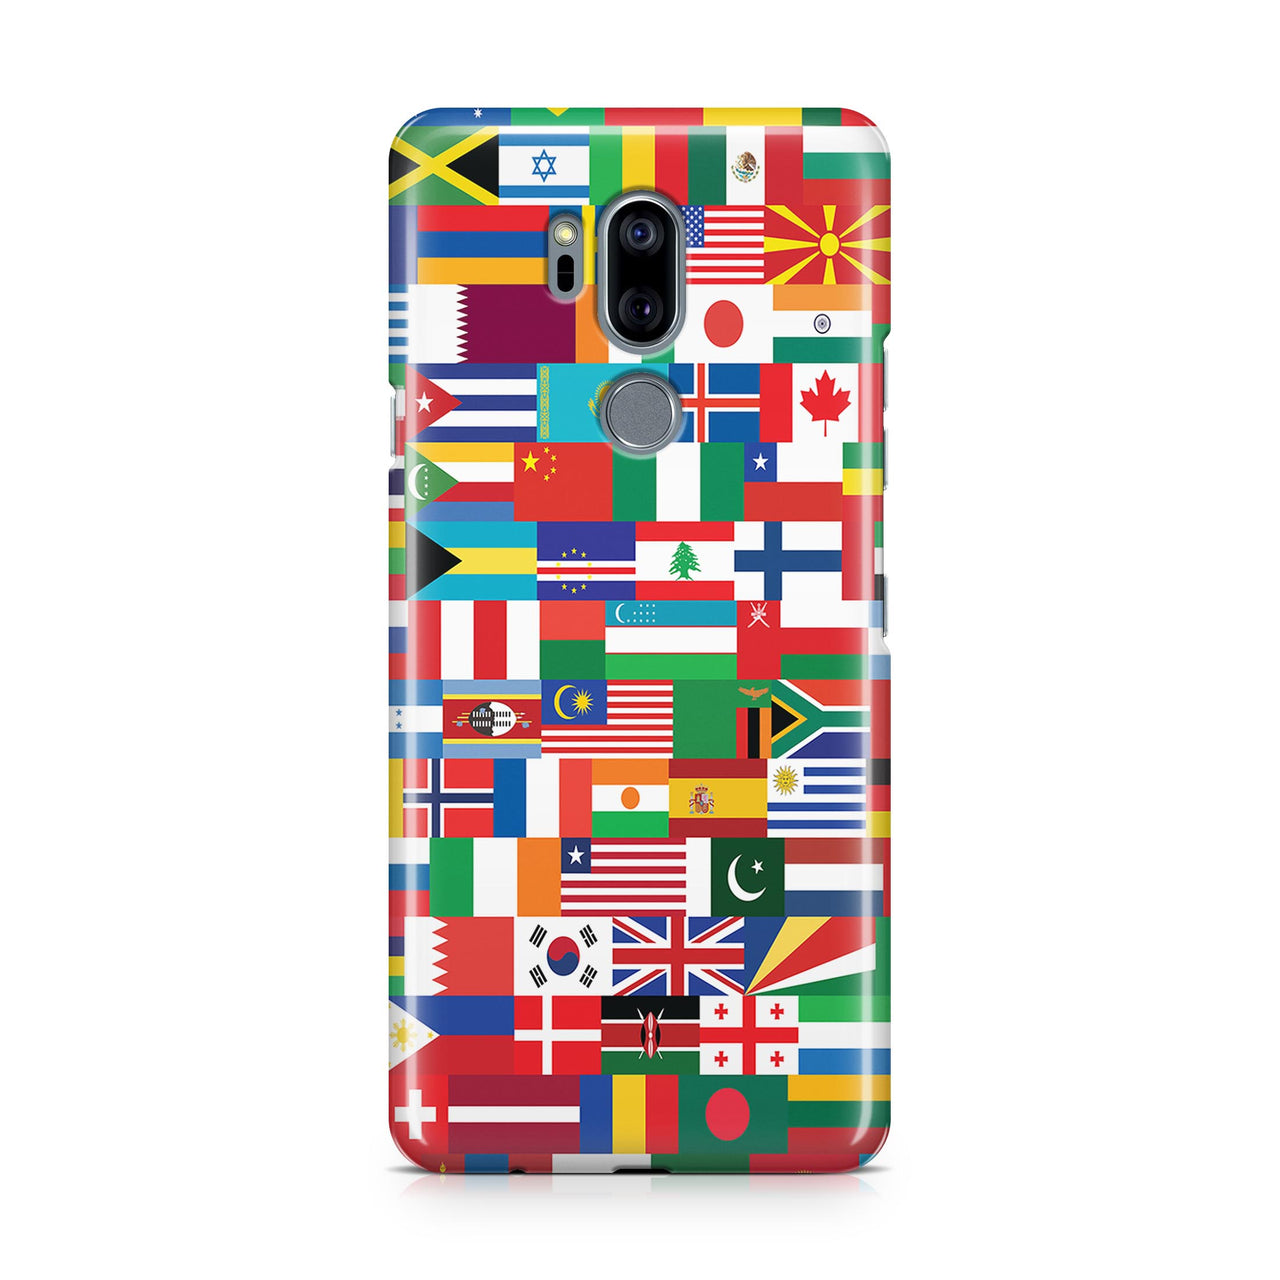 World Flags Designed LG Cases